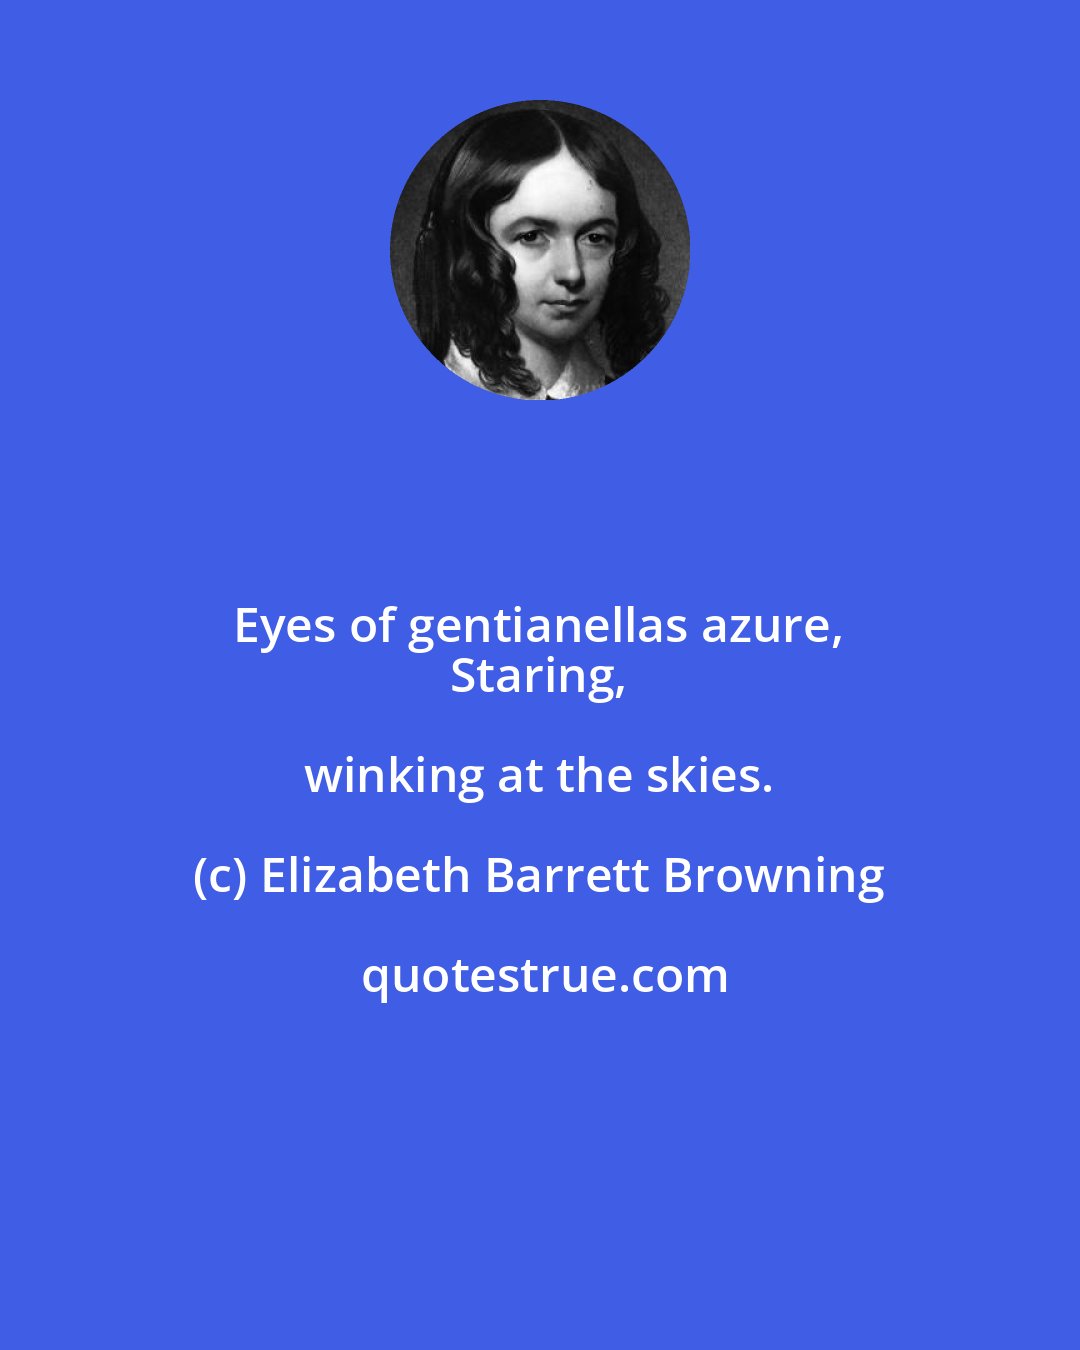 Elizabeth Barrett Browning: Eyes of gentianellas azure, 
 Staring, winking at the skies.